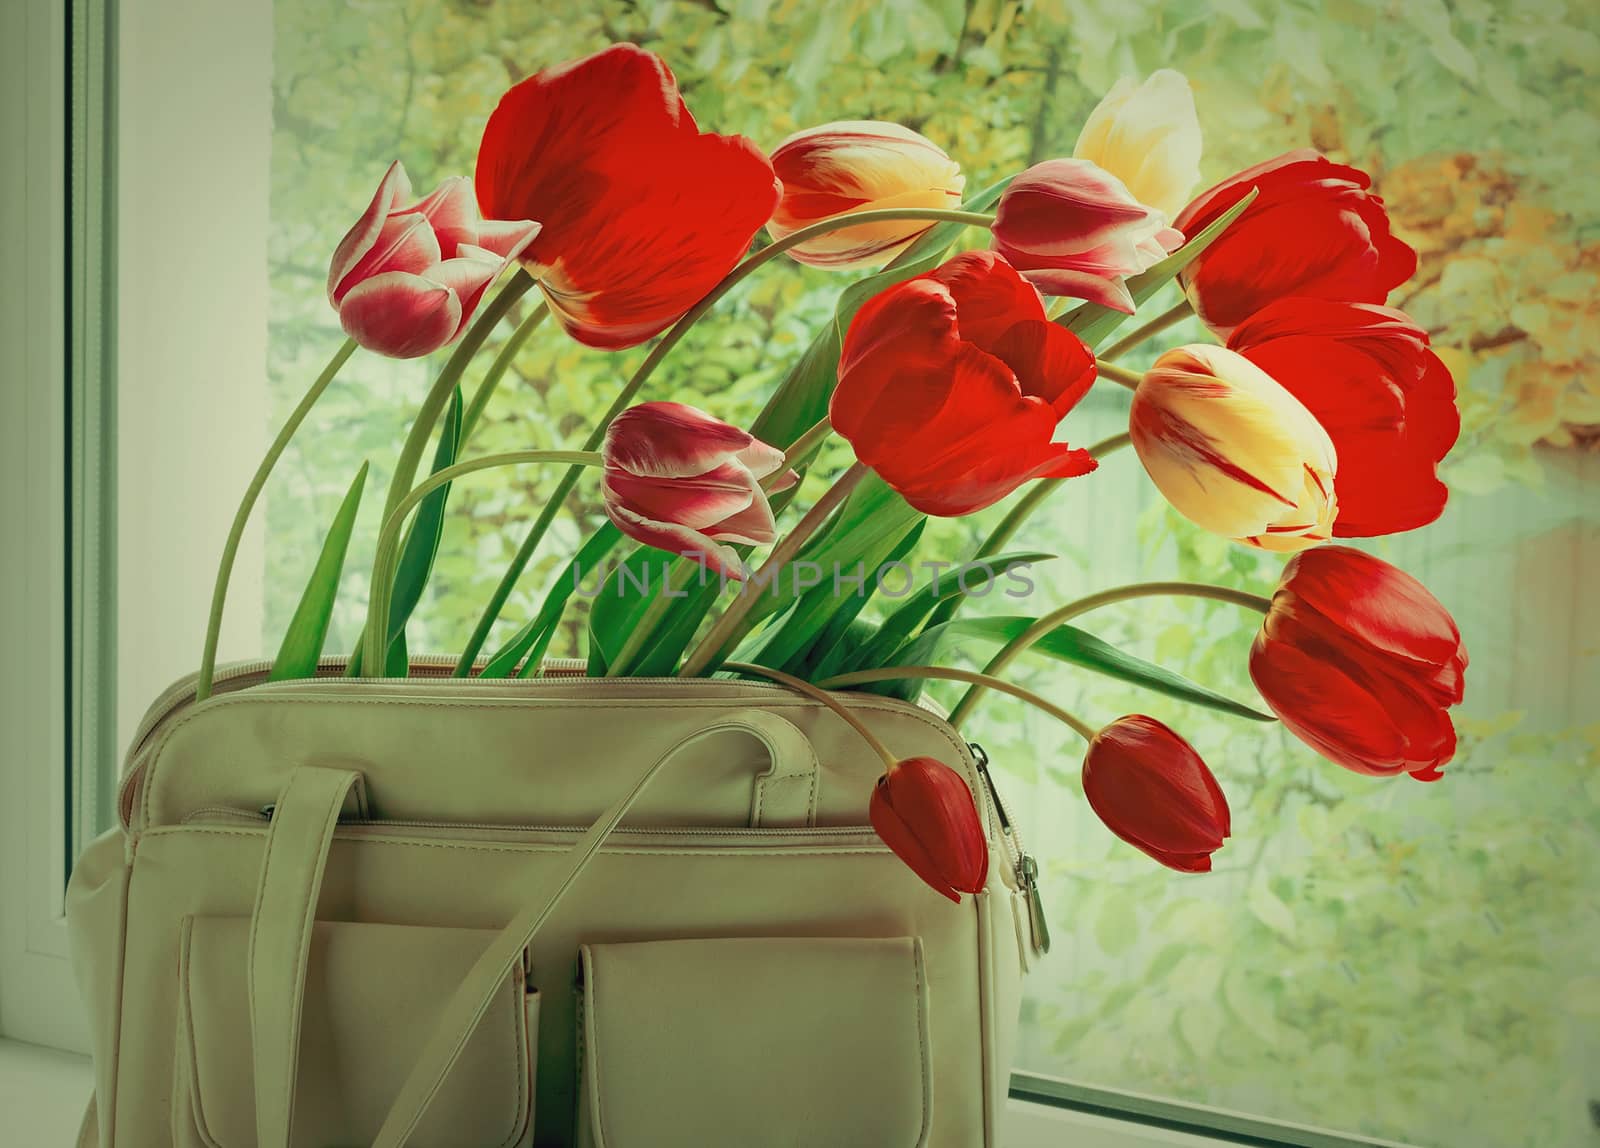 Flowers tulips and a women bag on a window window sill. by georgina198